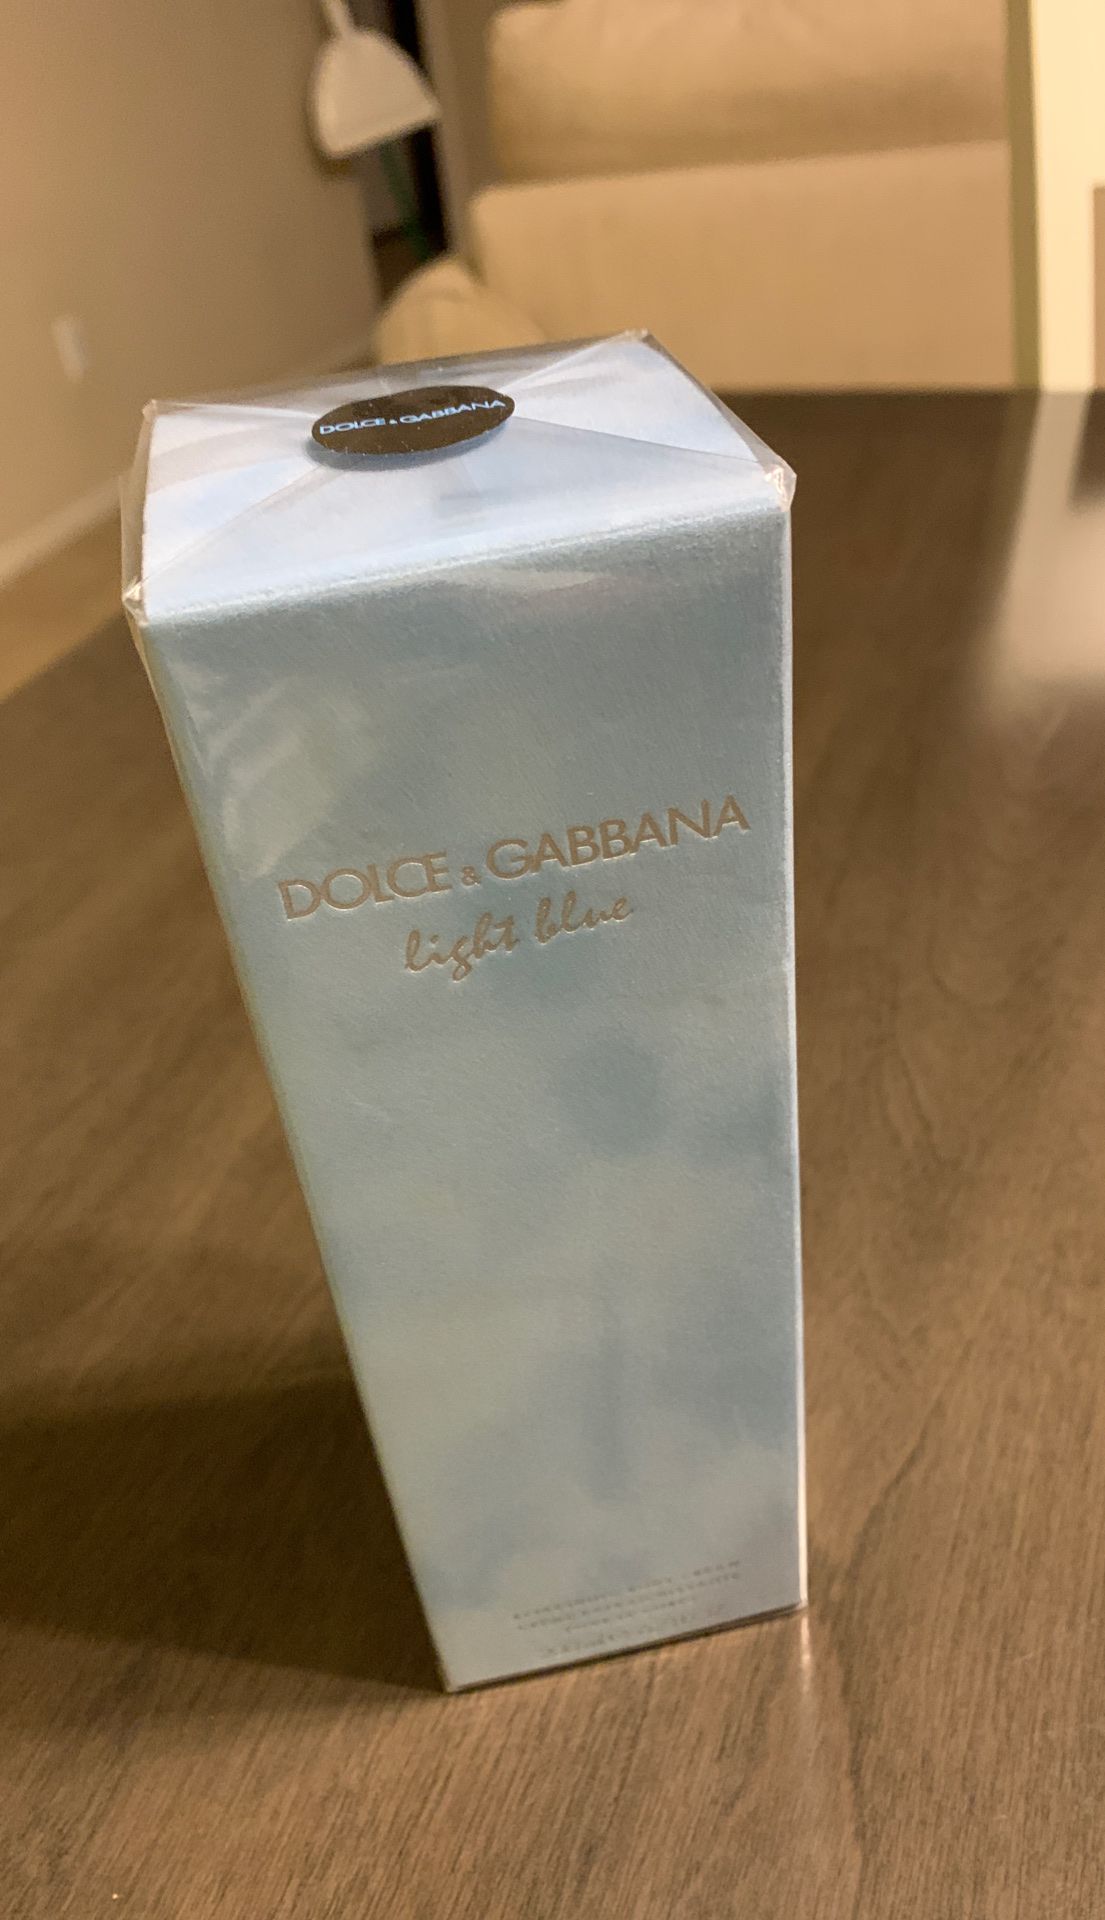 Dolce & Gobbana perfume